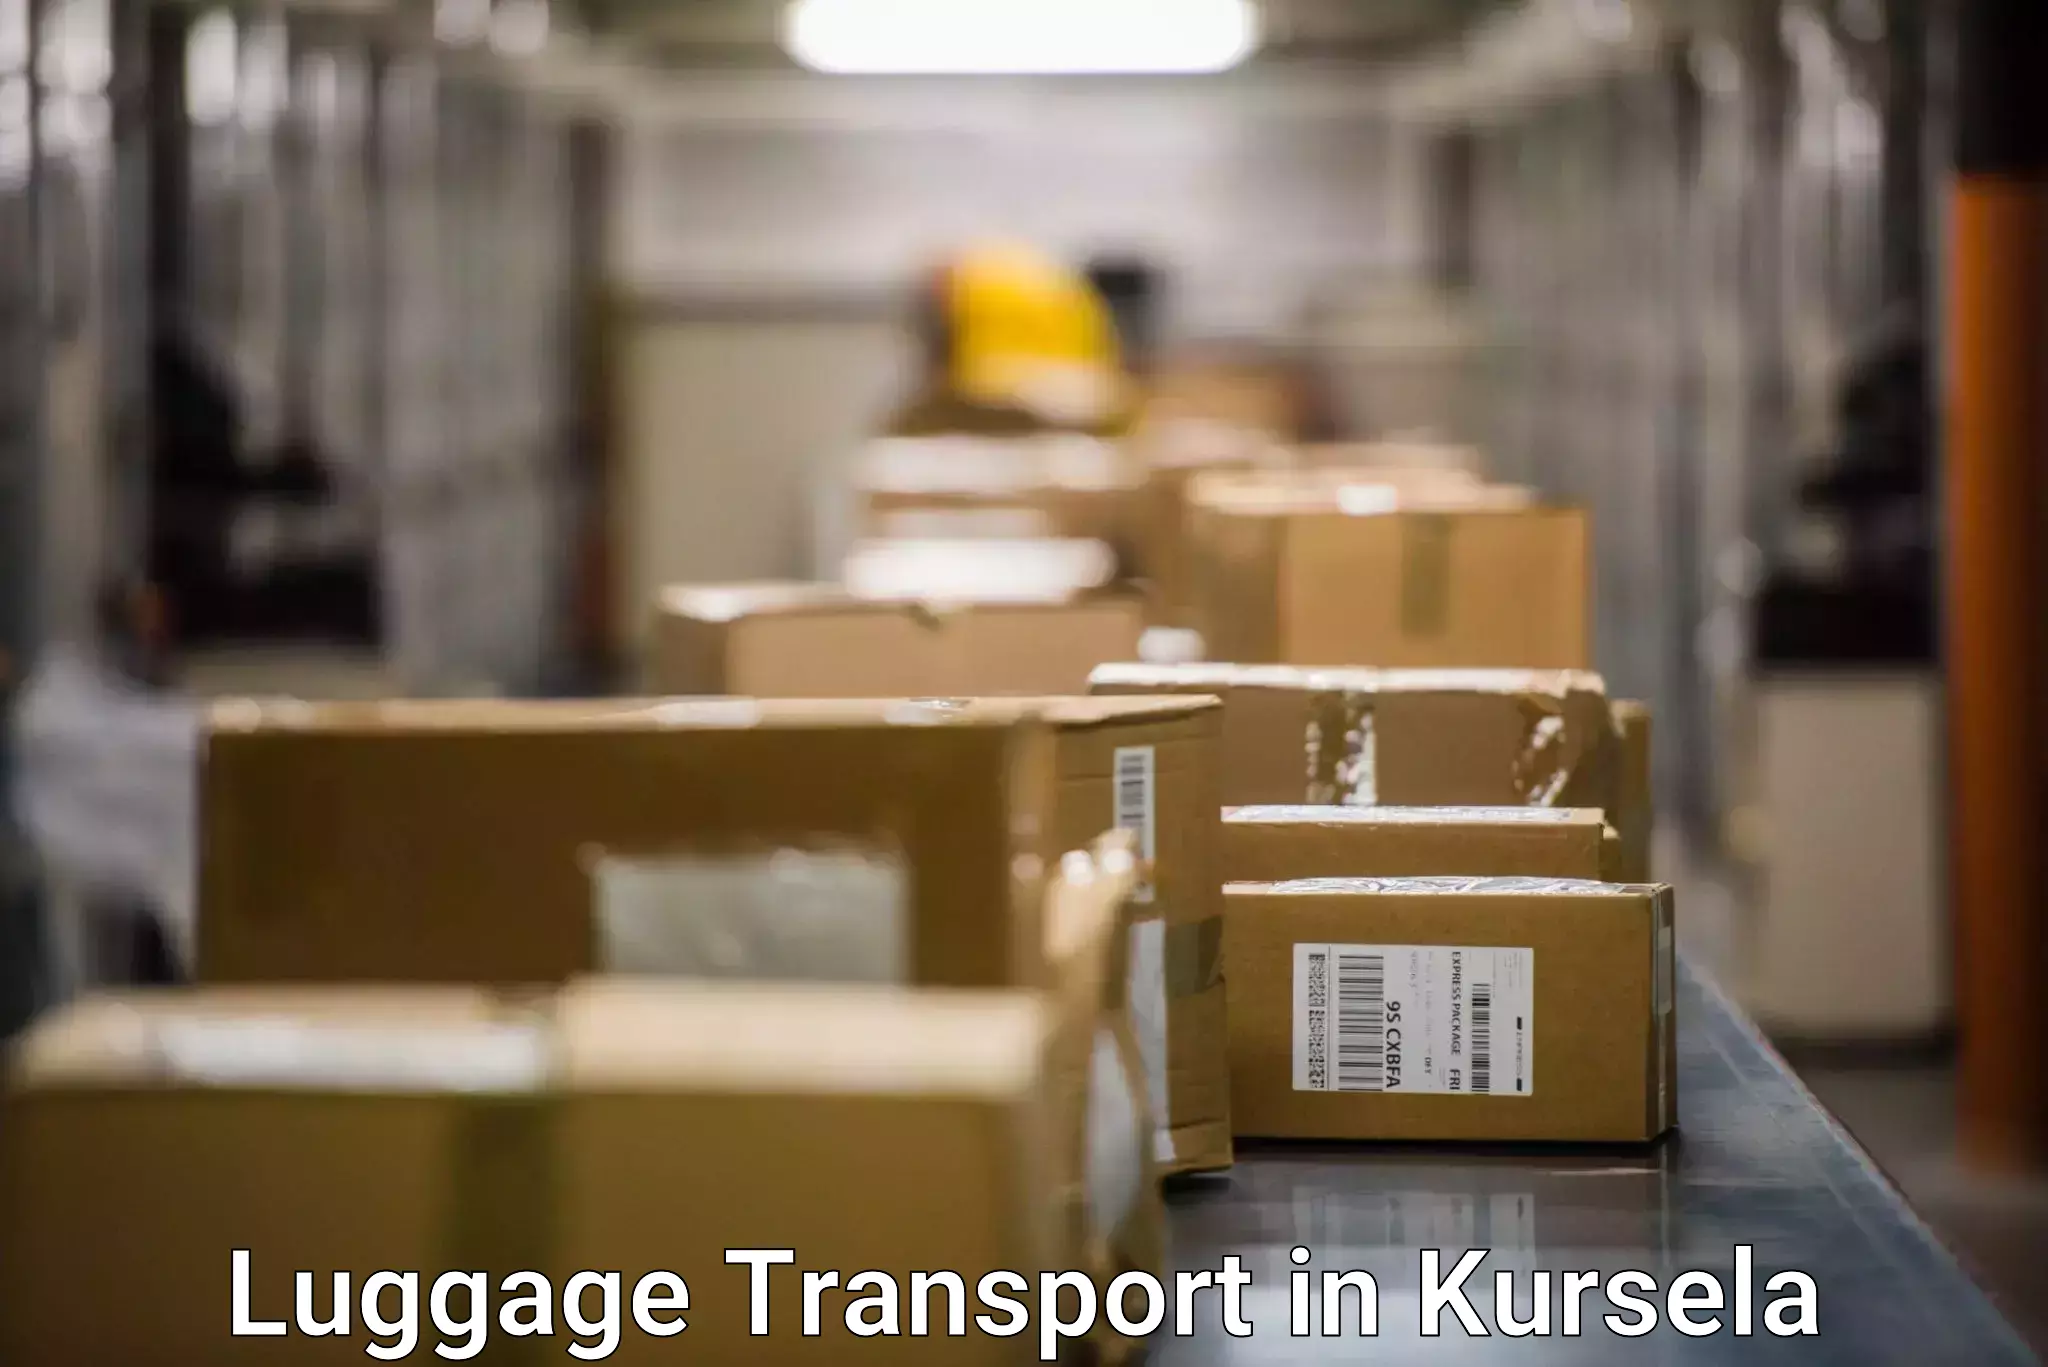 Rural baggage transport in Kursela